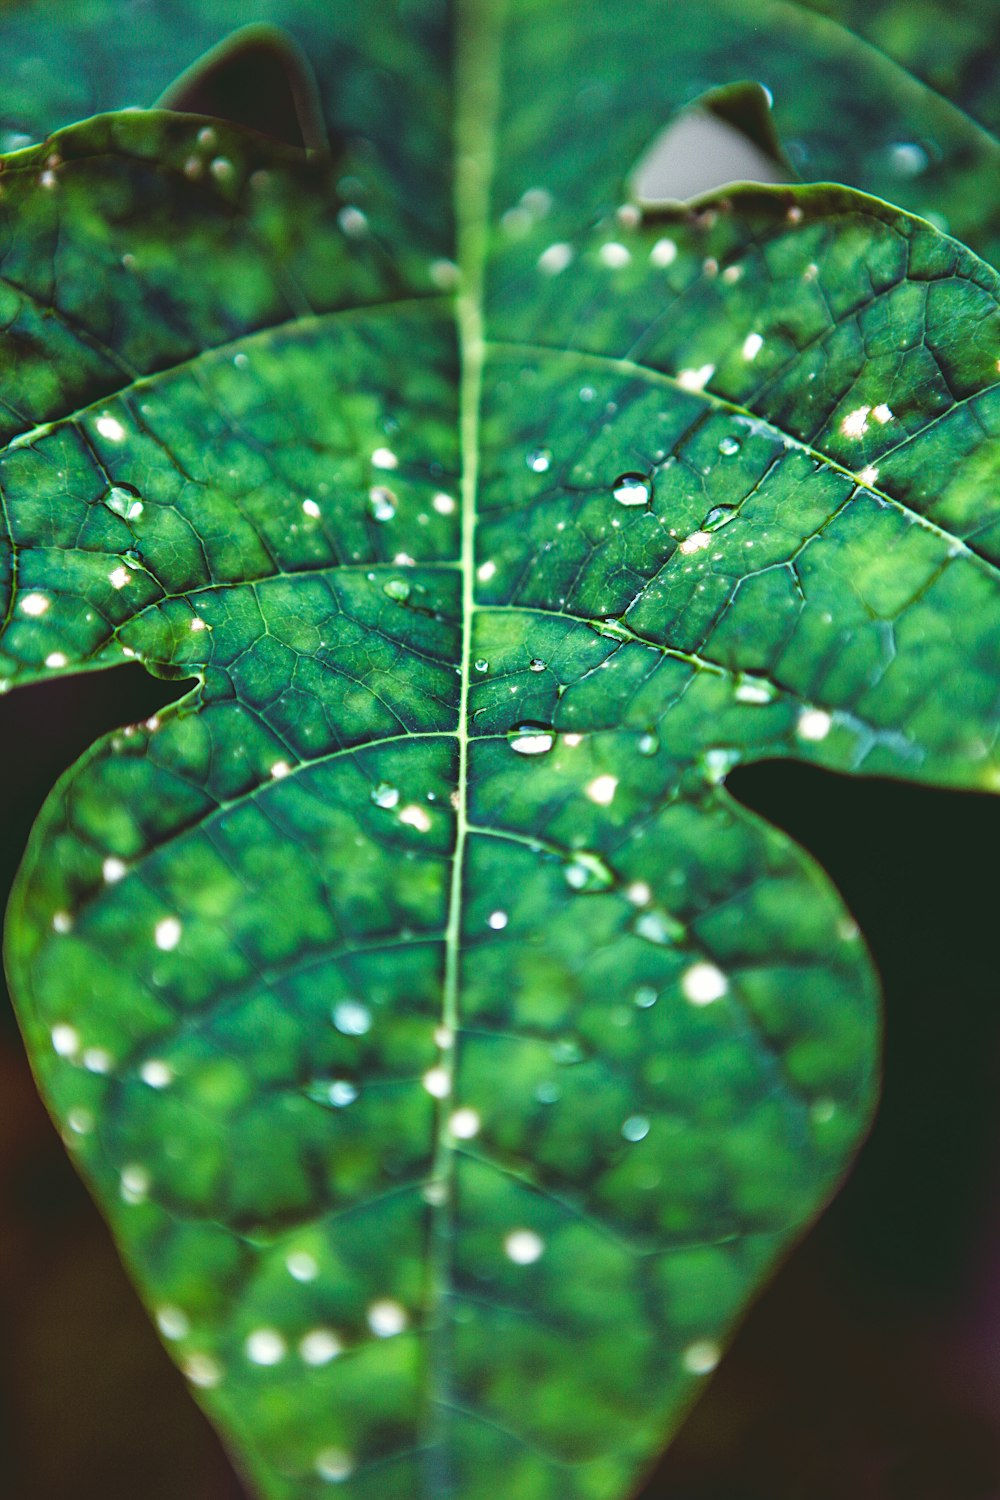 fotografia di primi piani di foglie verdi